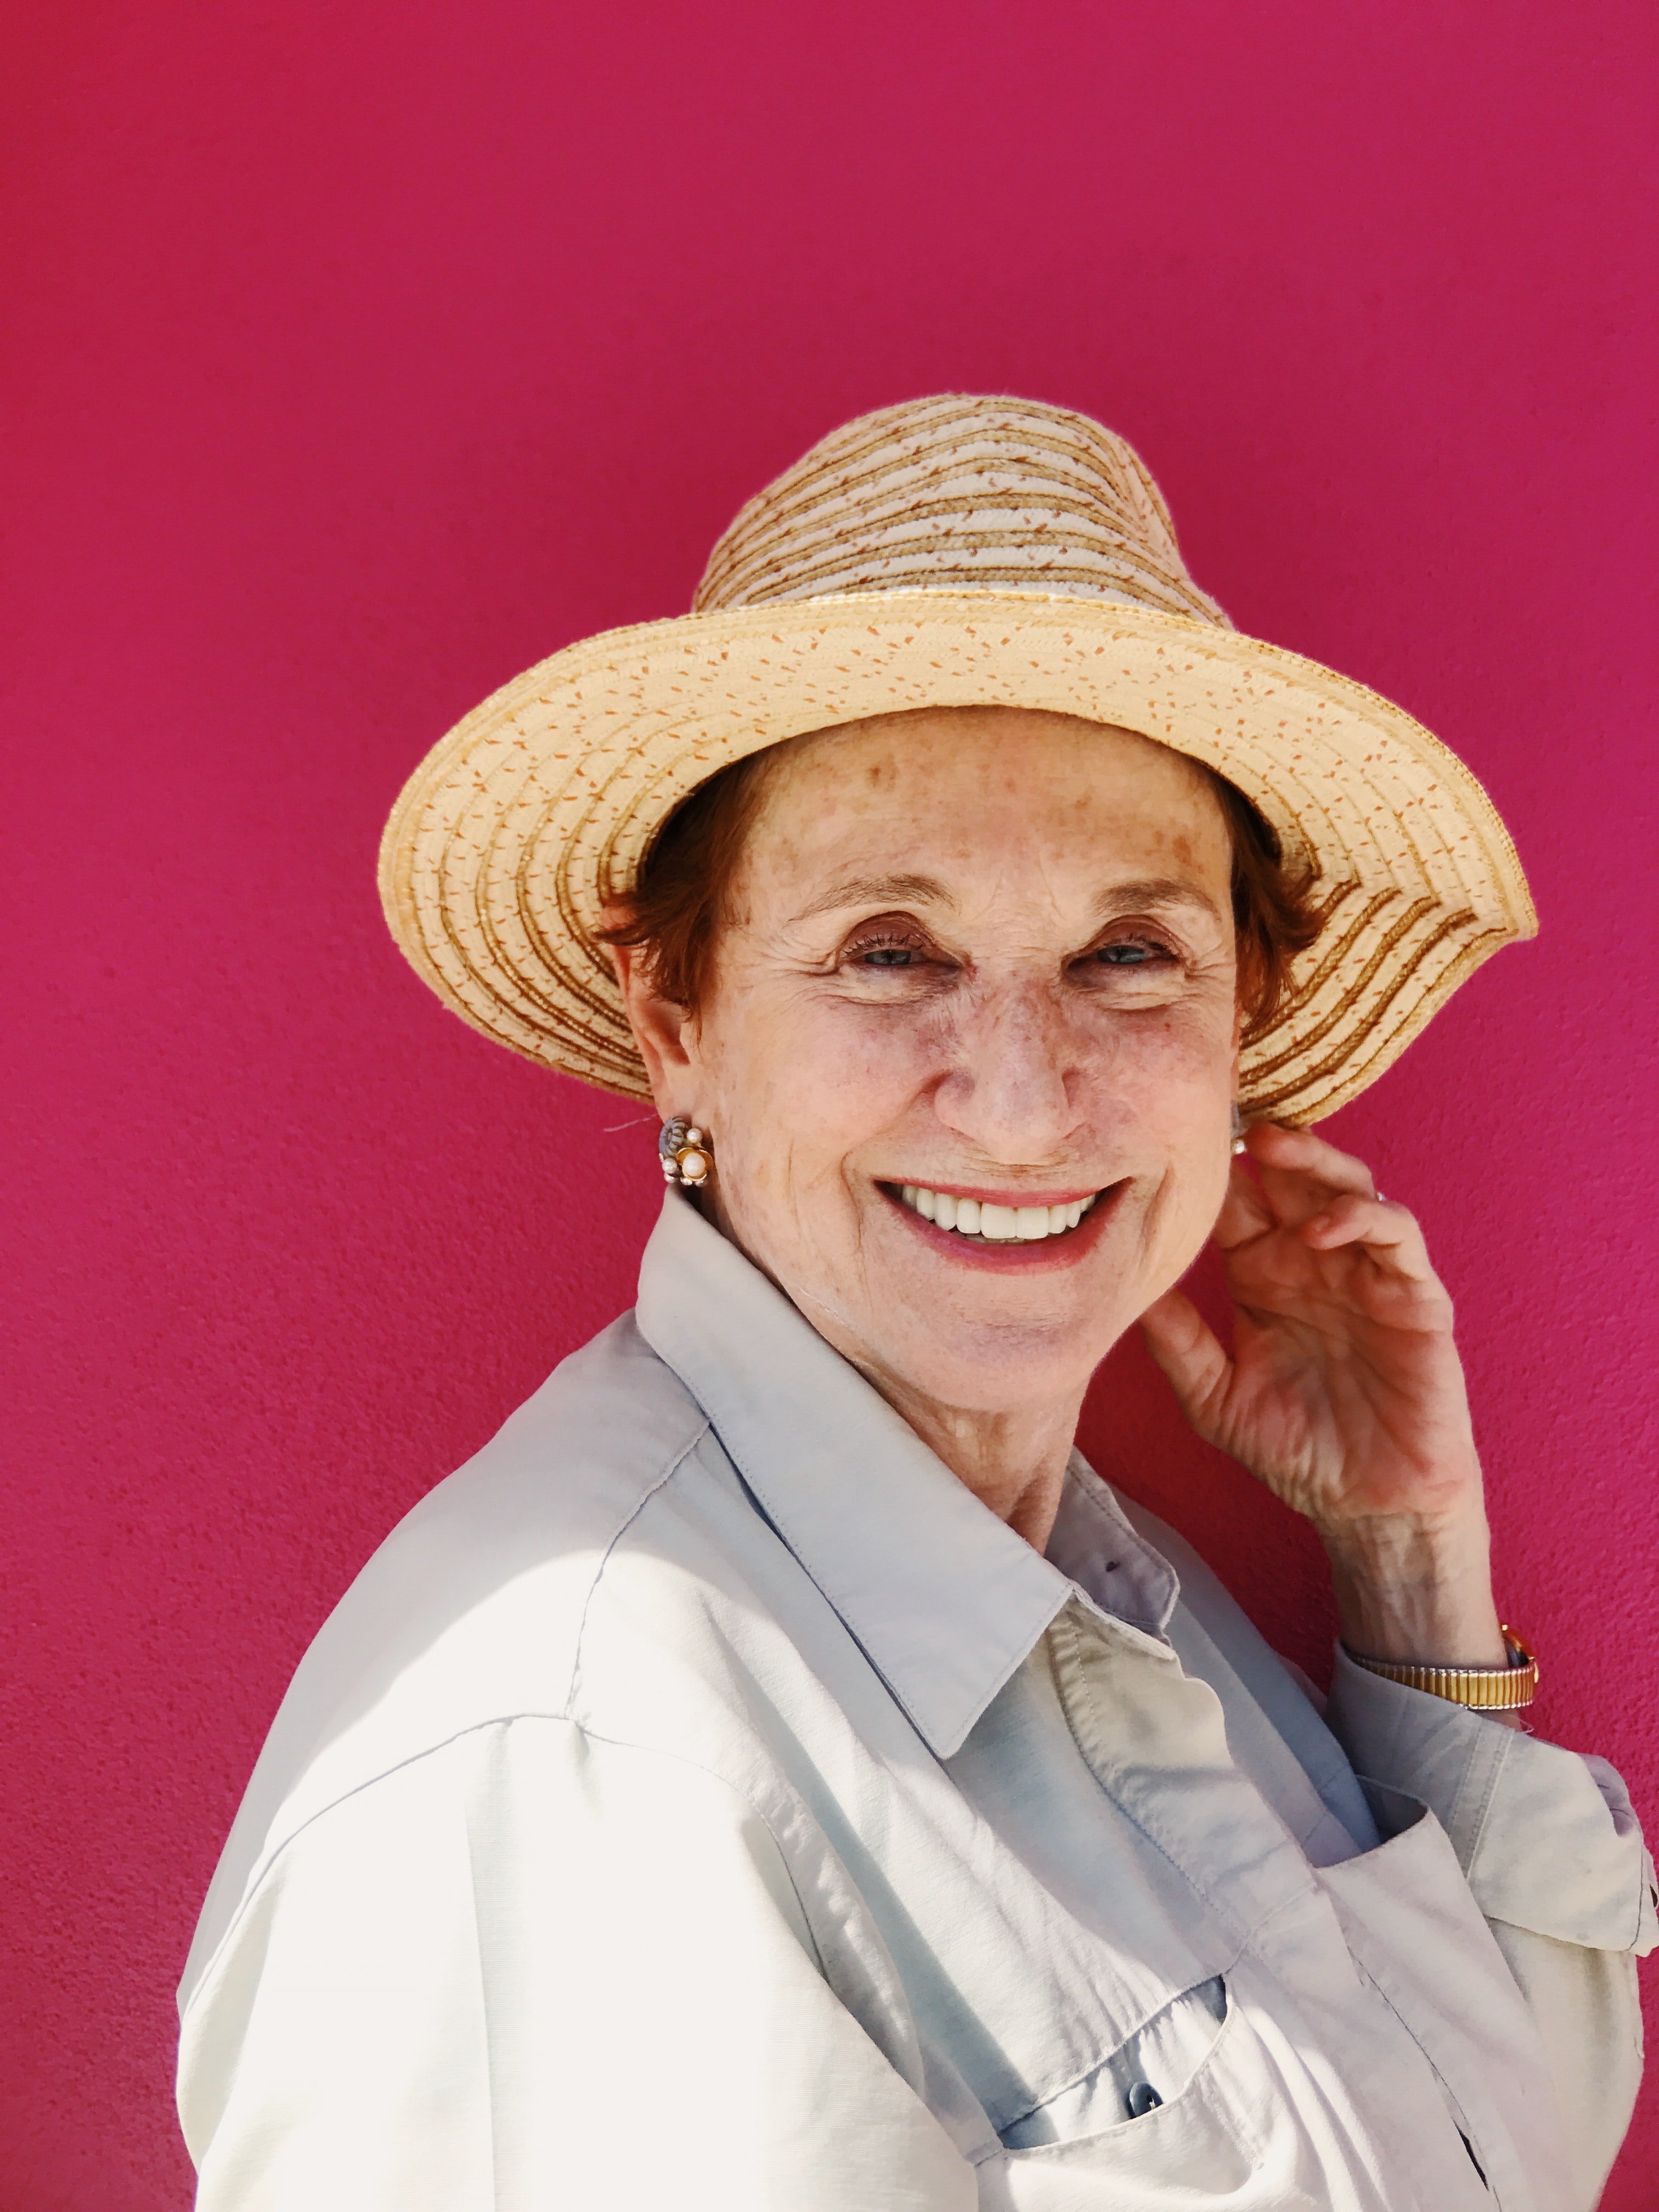 Smiling woman wearing a hat | Source: Unsplash